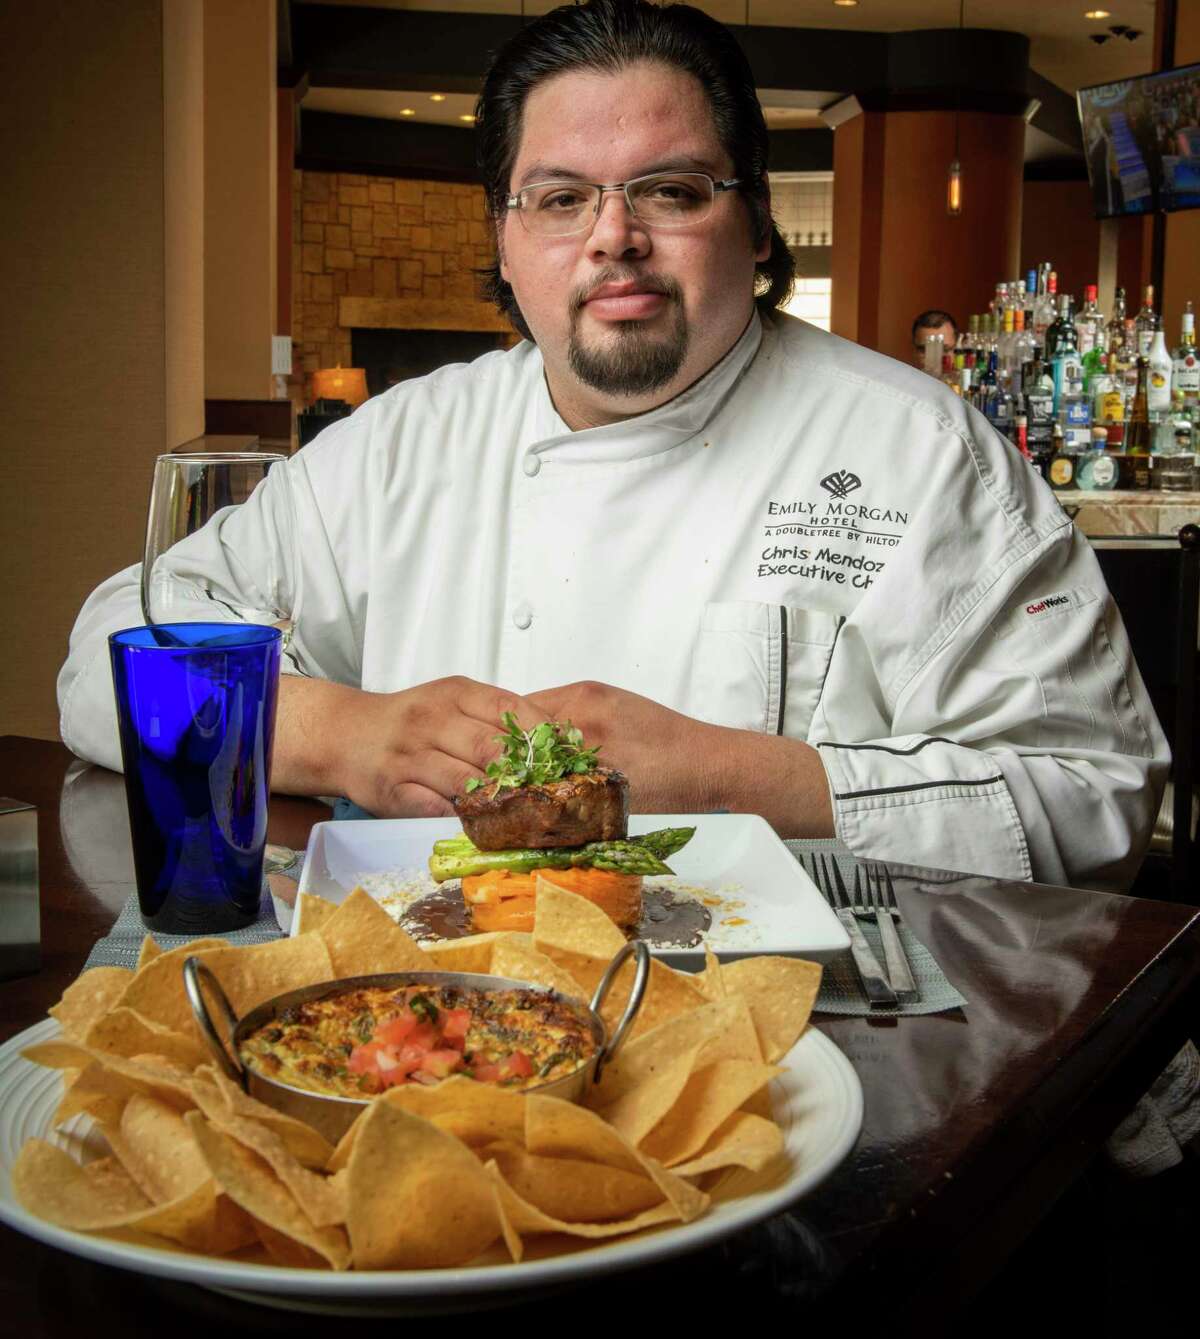 Oro Restaurant and Bar’s executive chef Christopher Mendoza